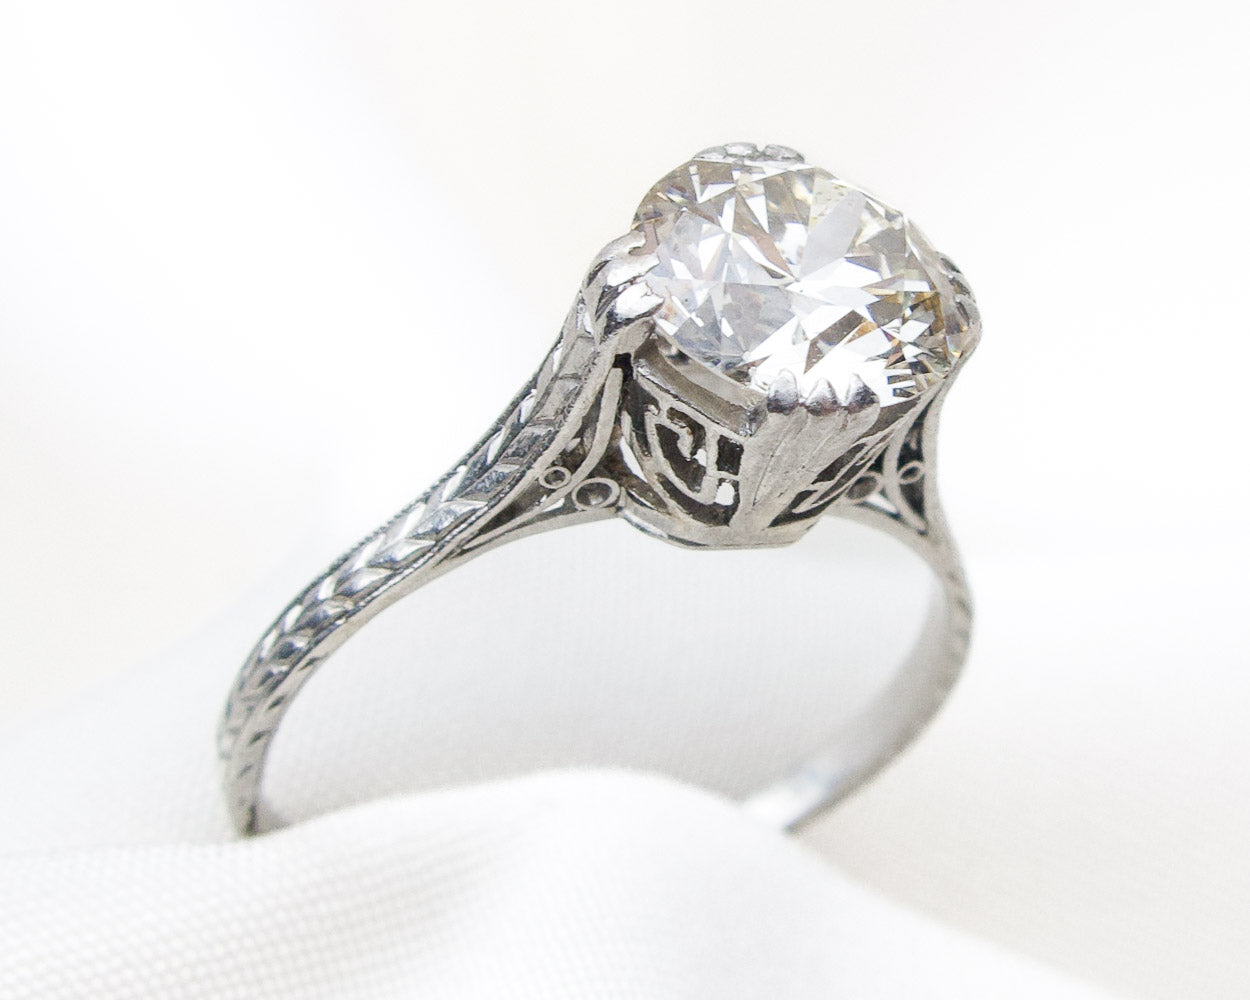 Art Deco 2-Carat Transitional-Cut Diamond Ring